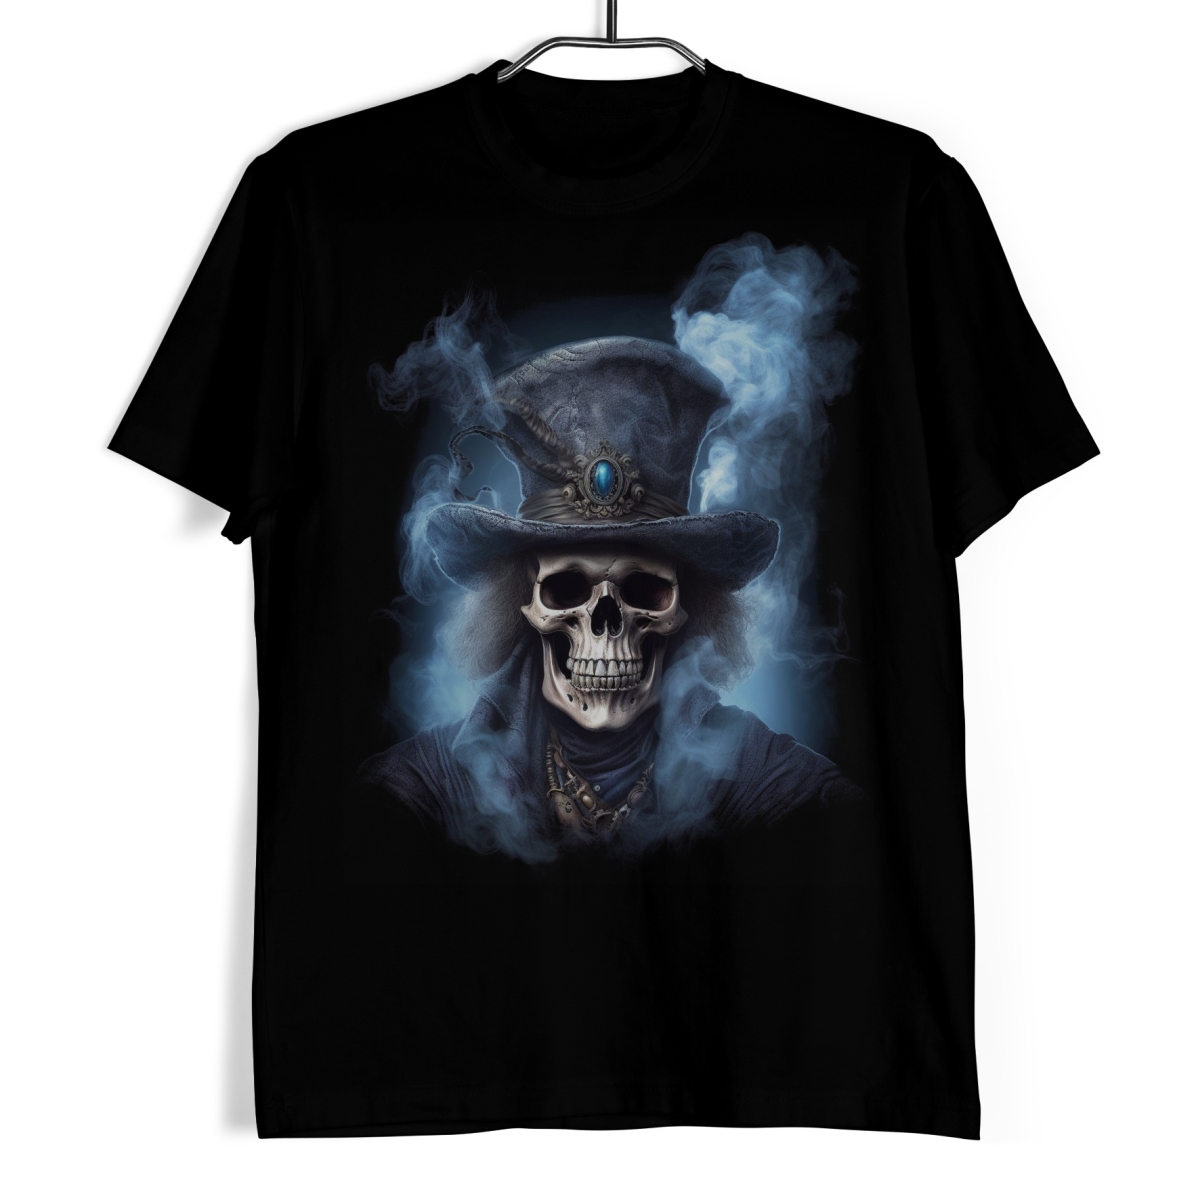 Tričko s lebkou - Stín pirátské hlídky XL